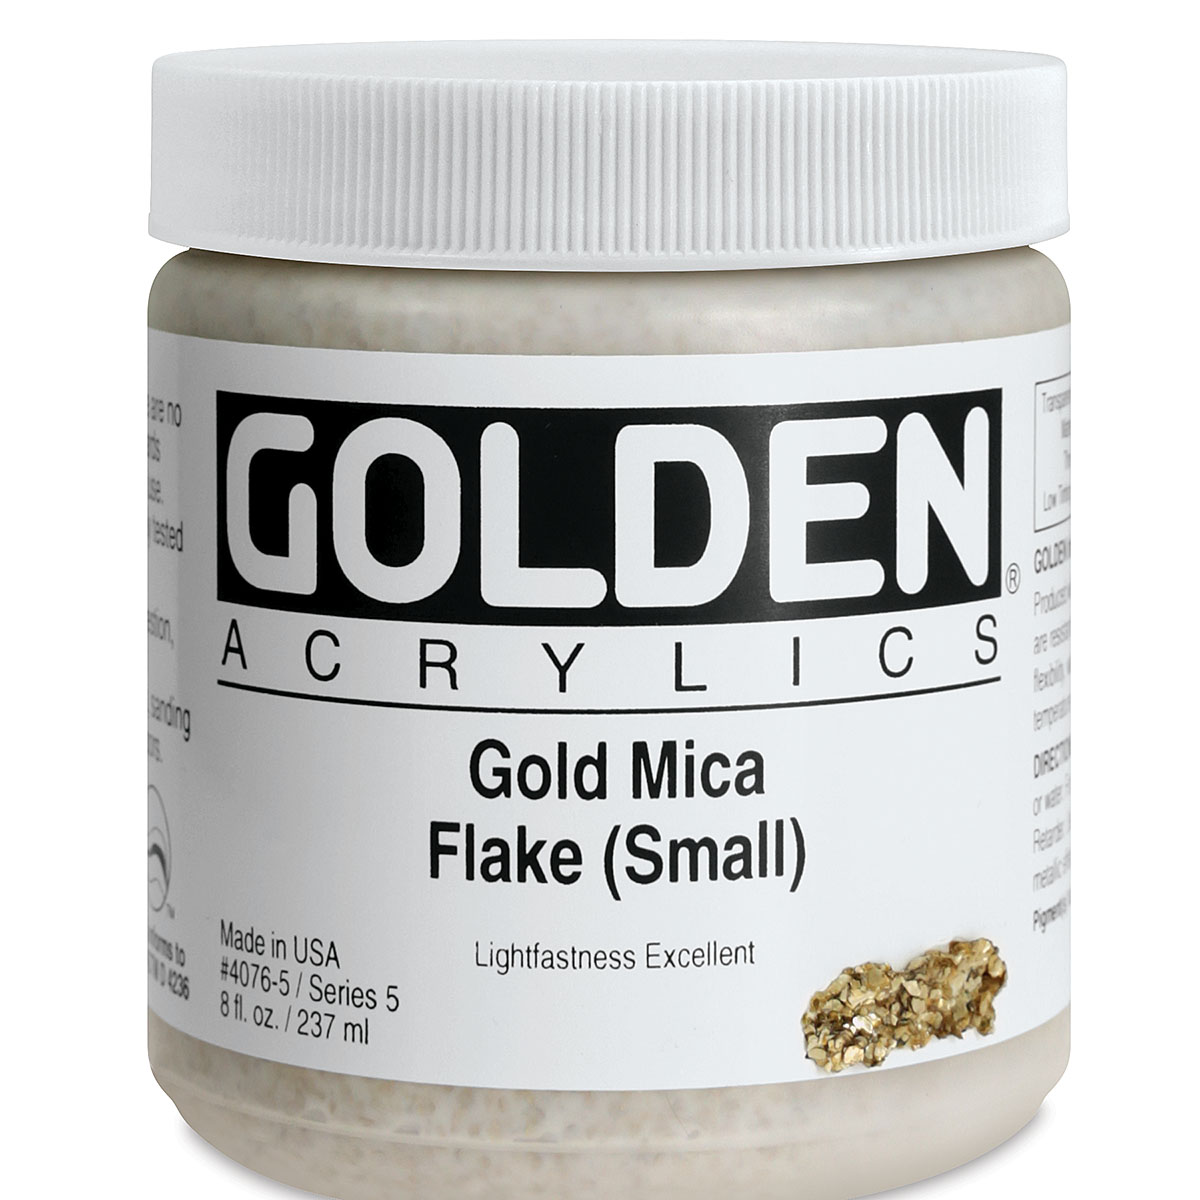 Golden Acrylics Heavy Body 4oz Pearl Mica Flake (Small)